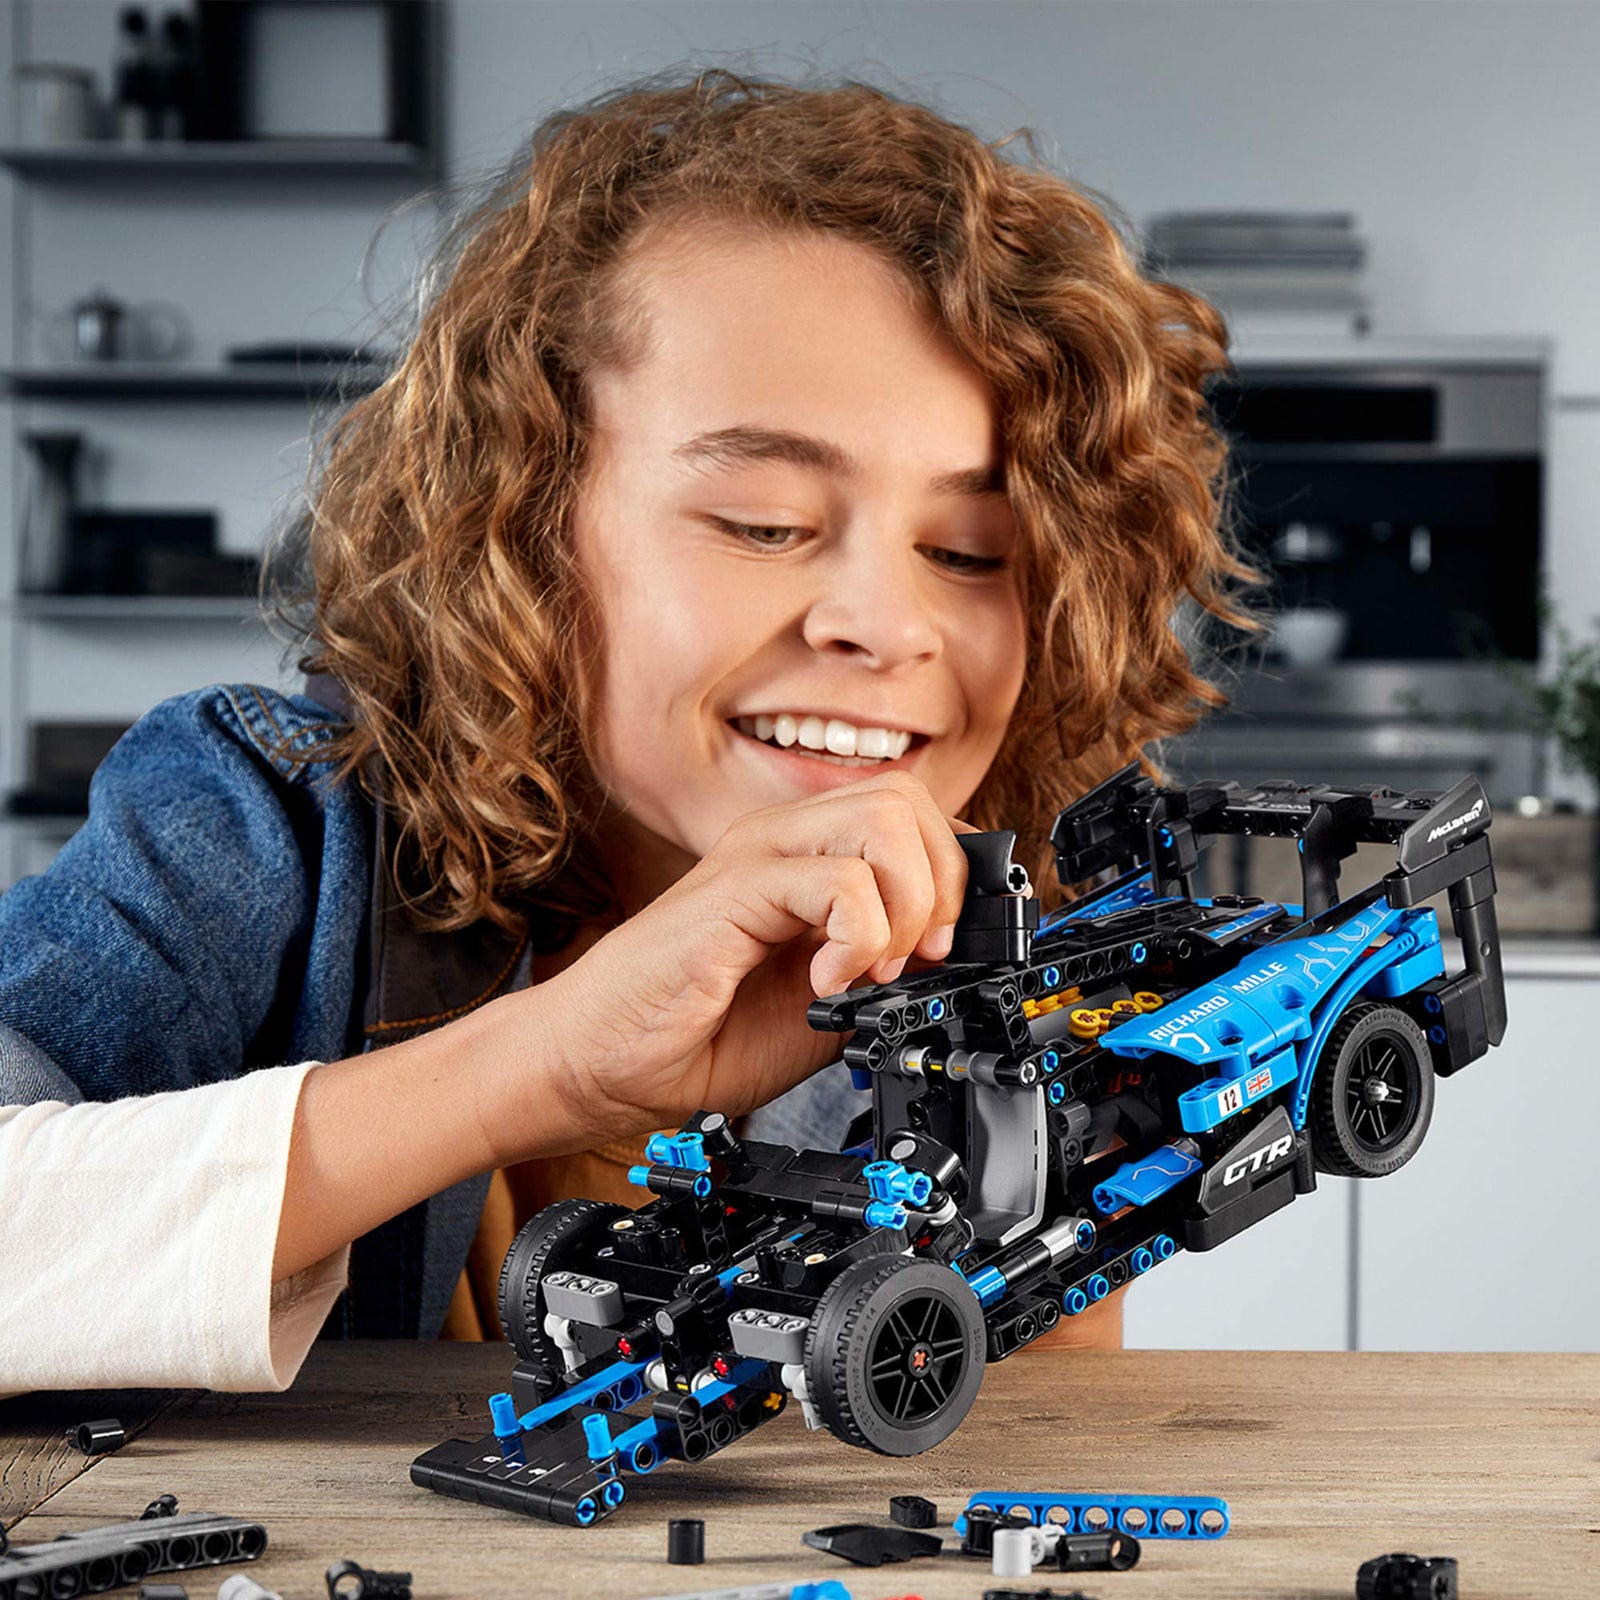 LEGO Technic McLaren Senna GTR 42123 Toy Car Model Building Kit; Build and Display an Authentic McLaren Supercar, New 2021 (830 Pieces)